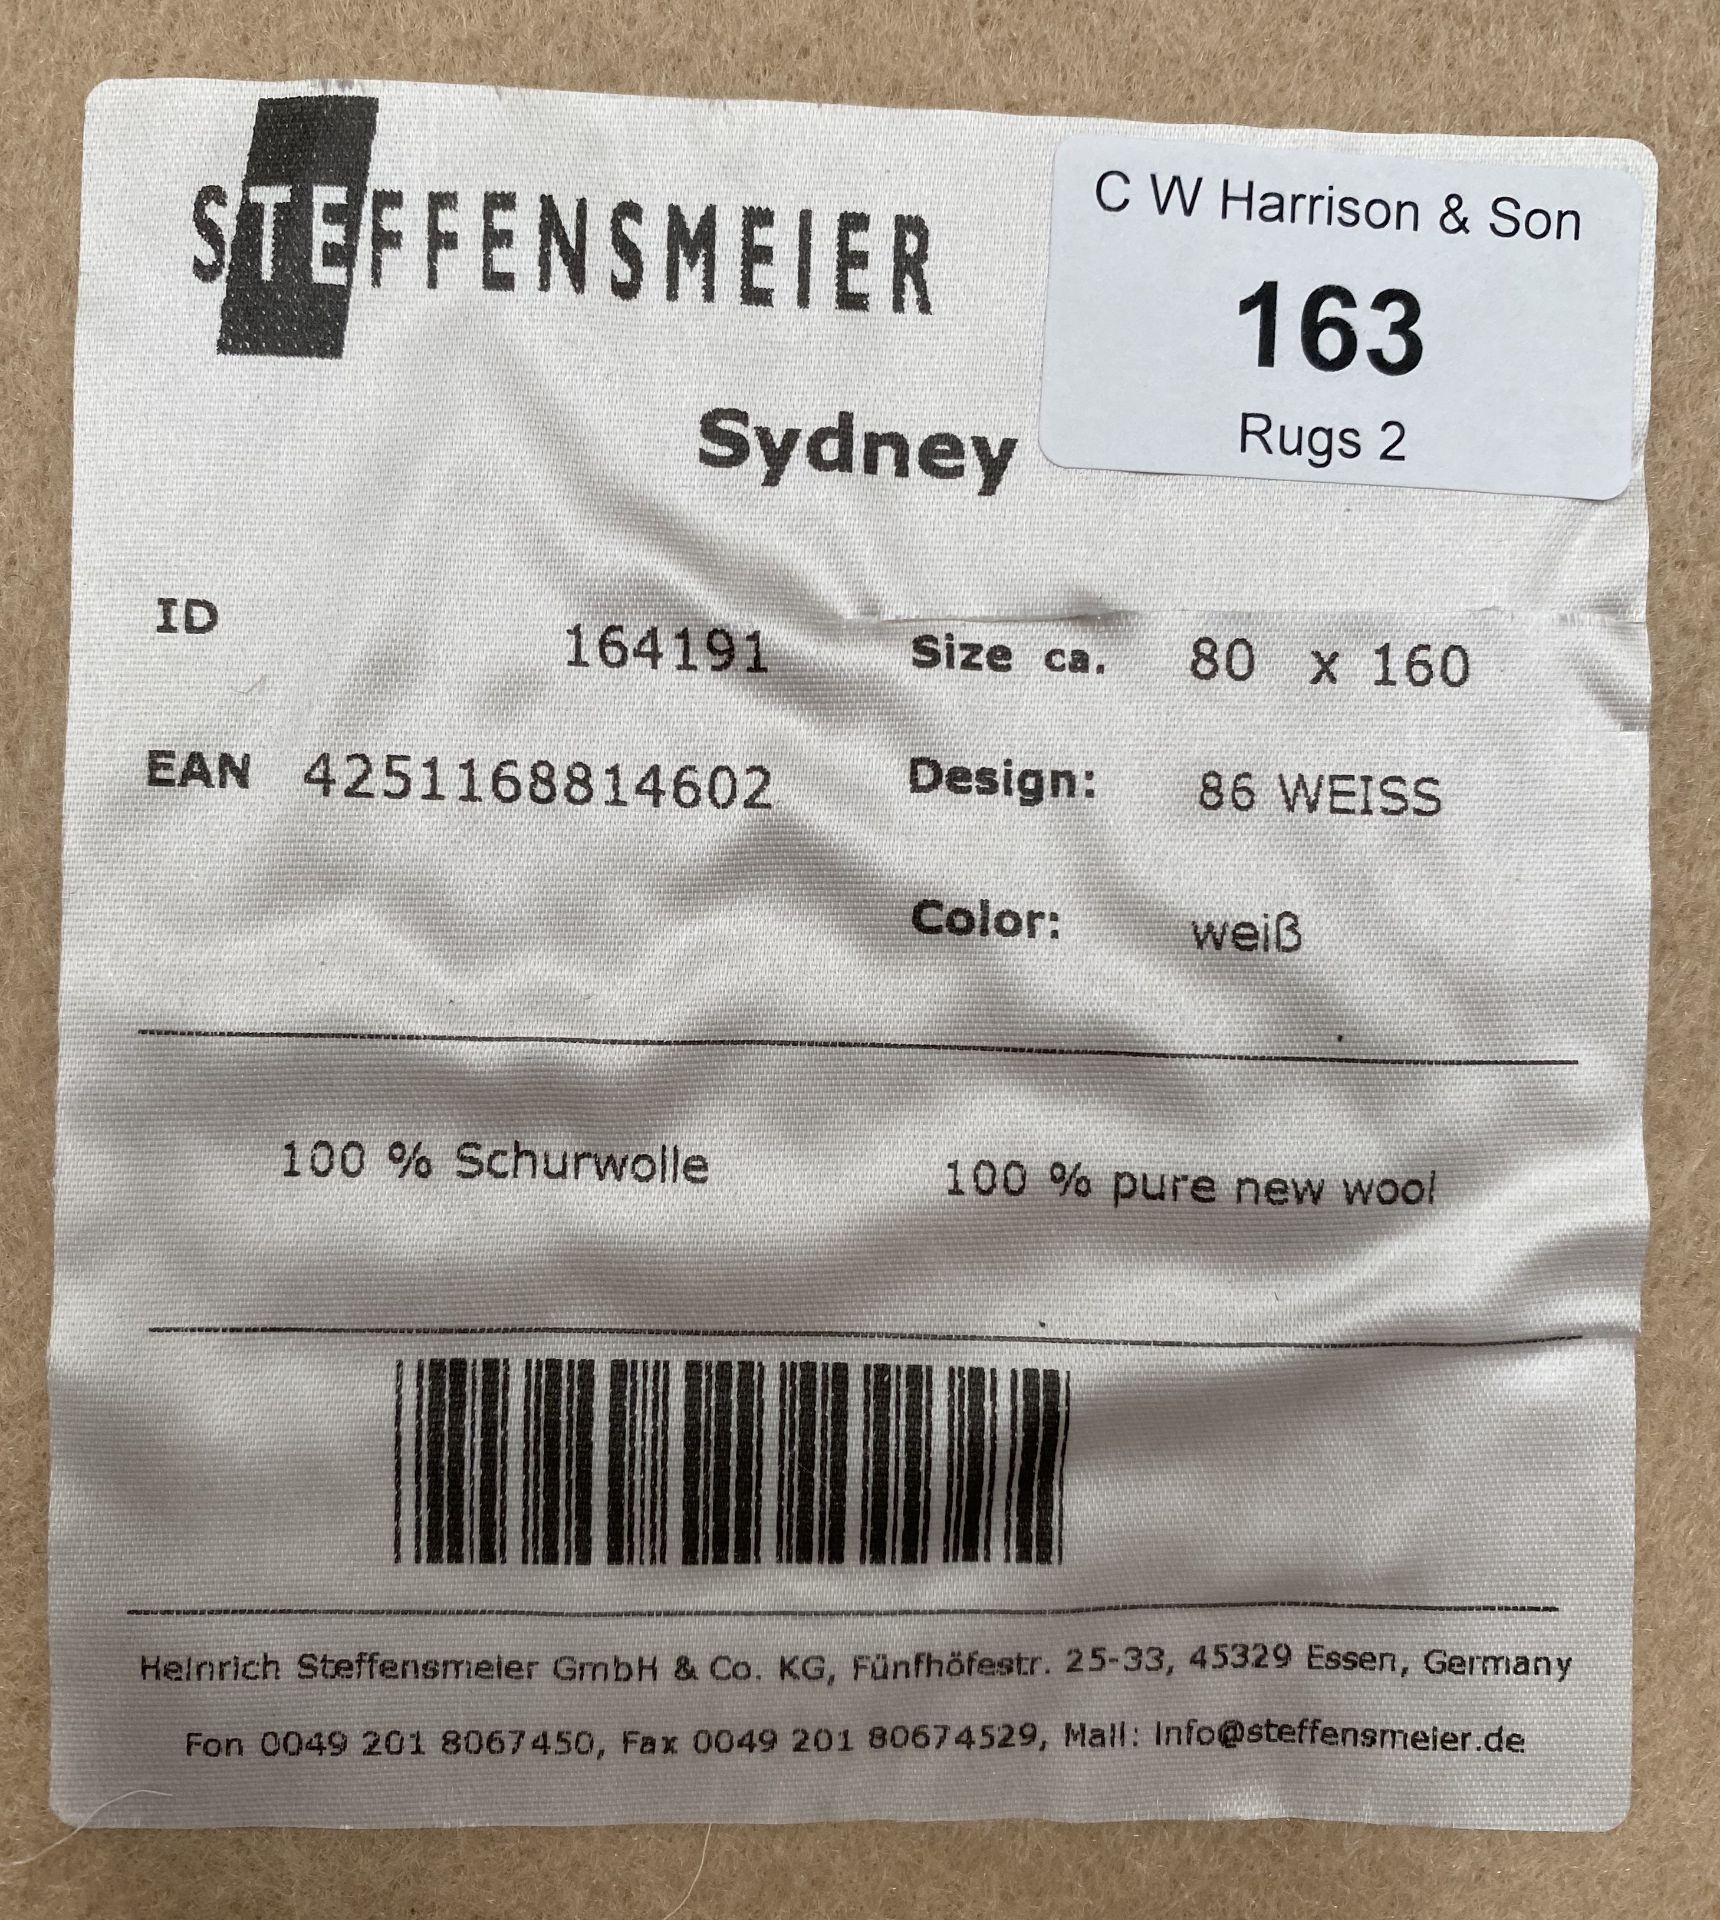 A Steffensmeier Sydney 164191 100% pure wool rug - 80cm x 160cm - Image 2 of 2